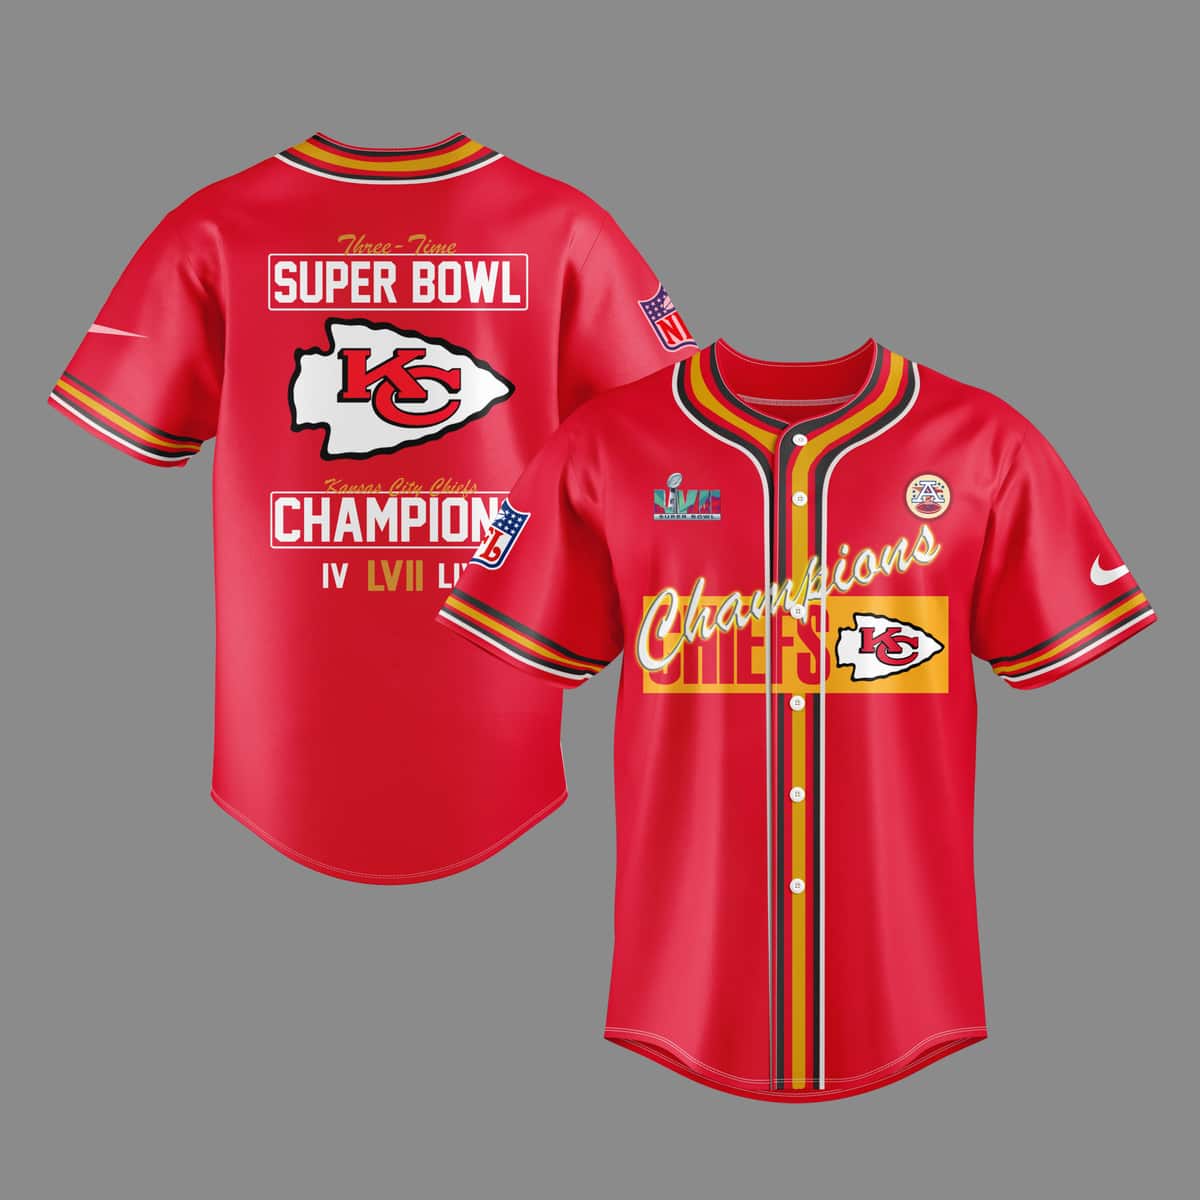 Super Bowl Champions NFL Kansas City Chiefs Baseball Jersey